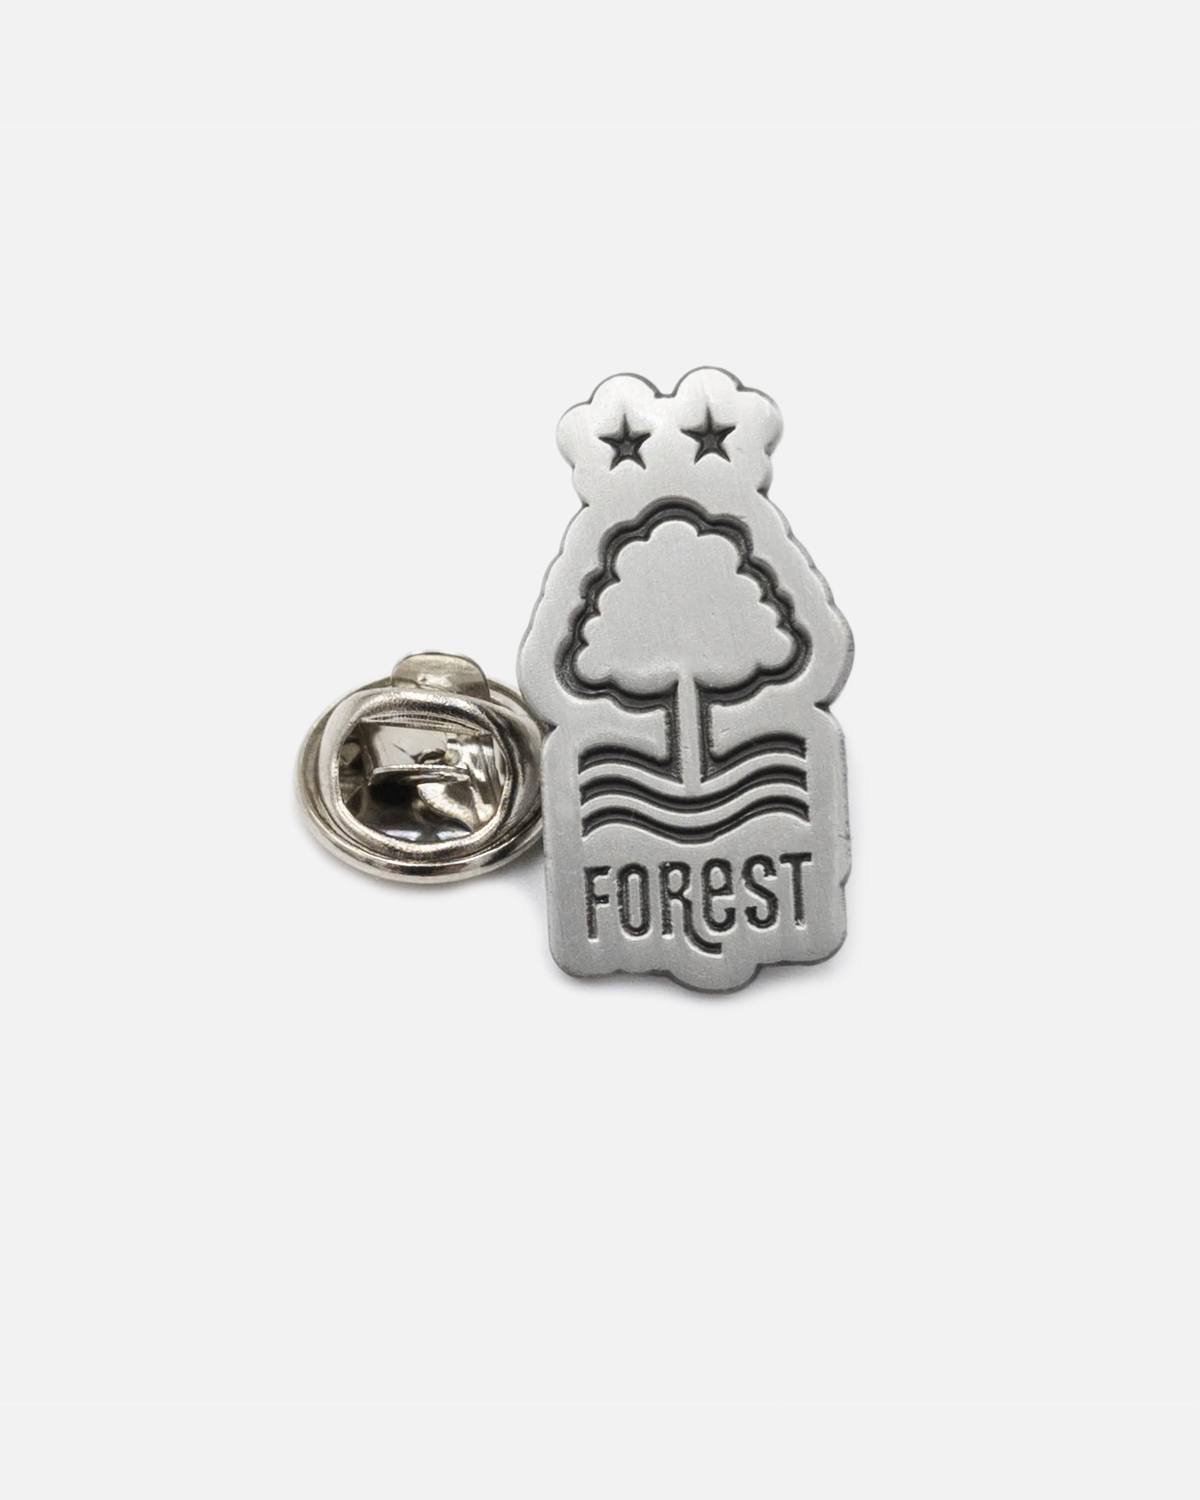 NFFC Antique Crest Pin Badge - Nottingham Forest FC